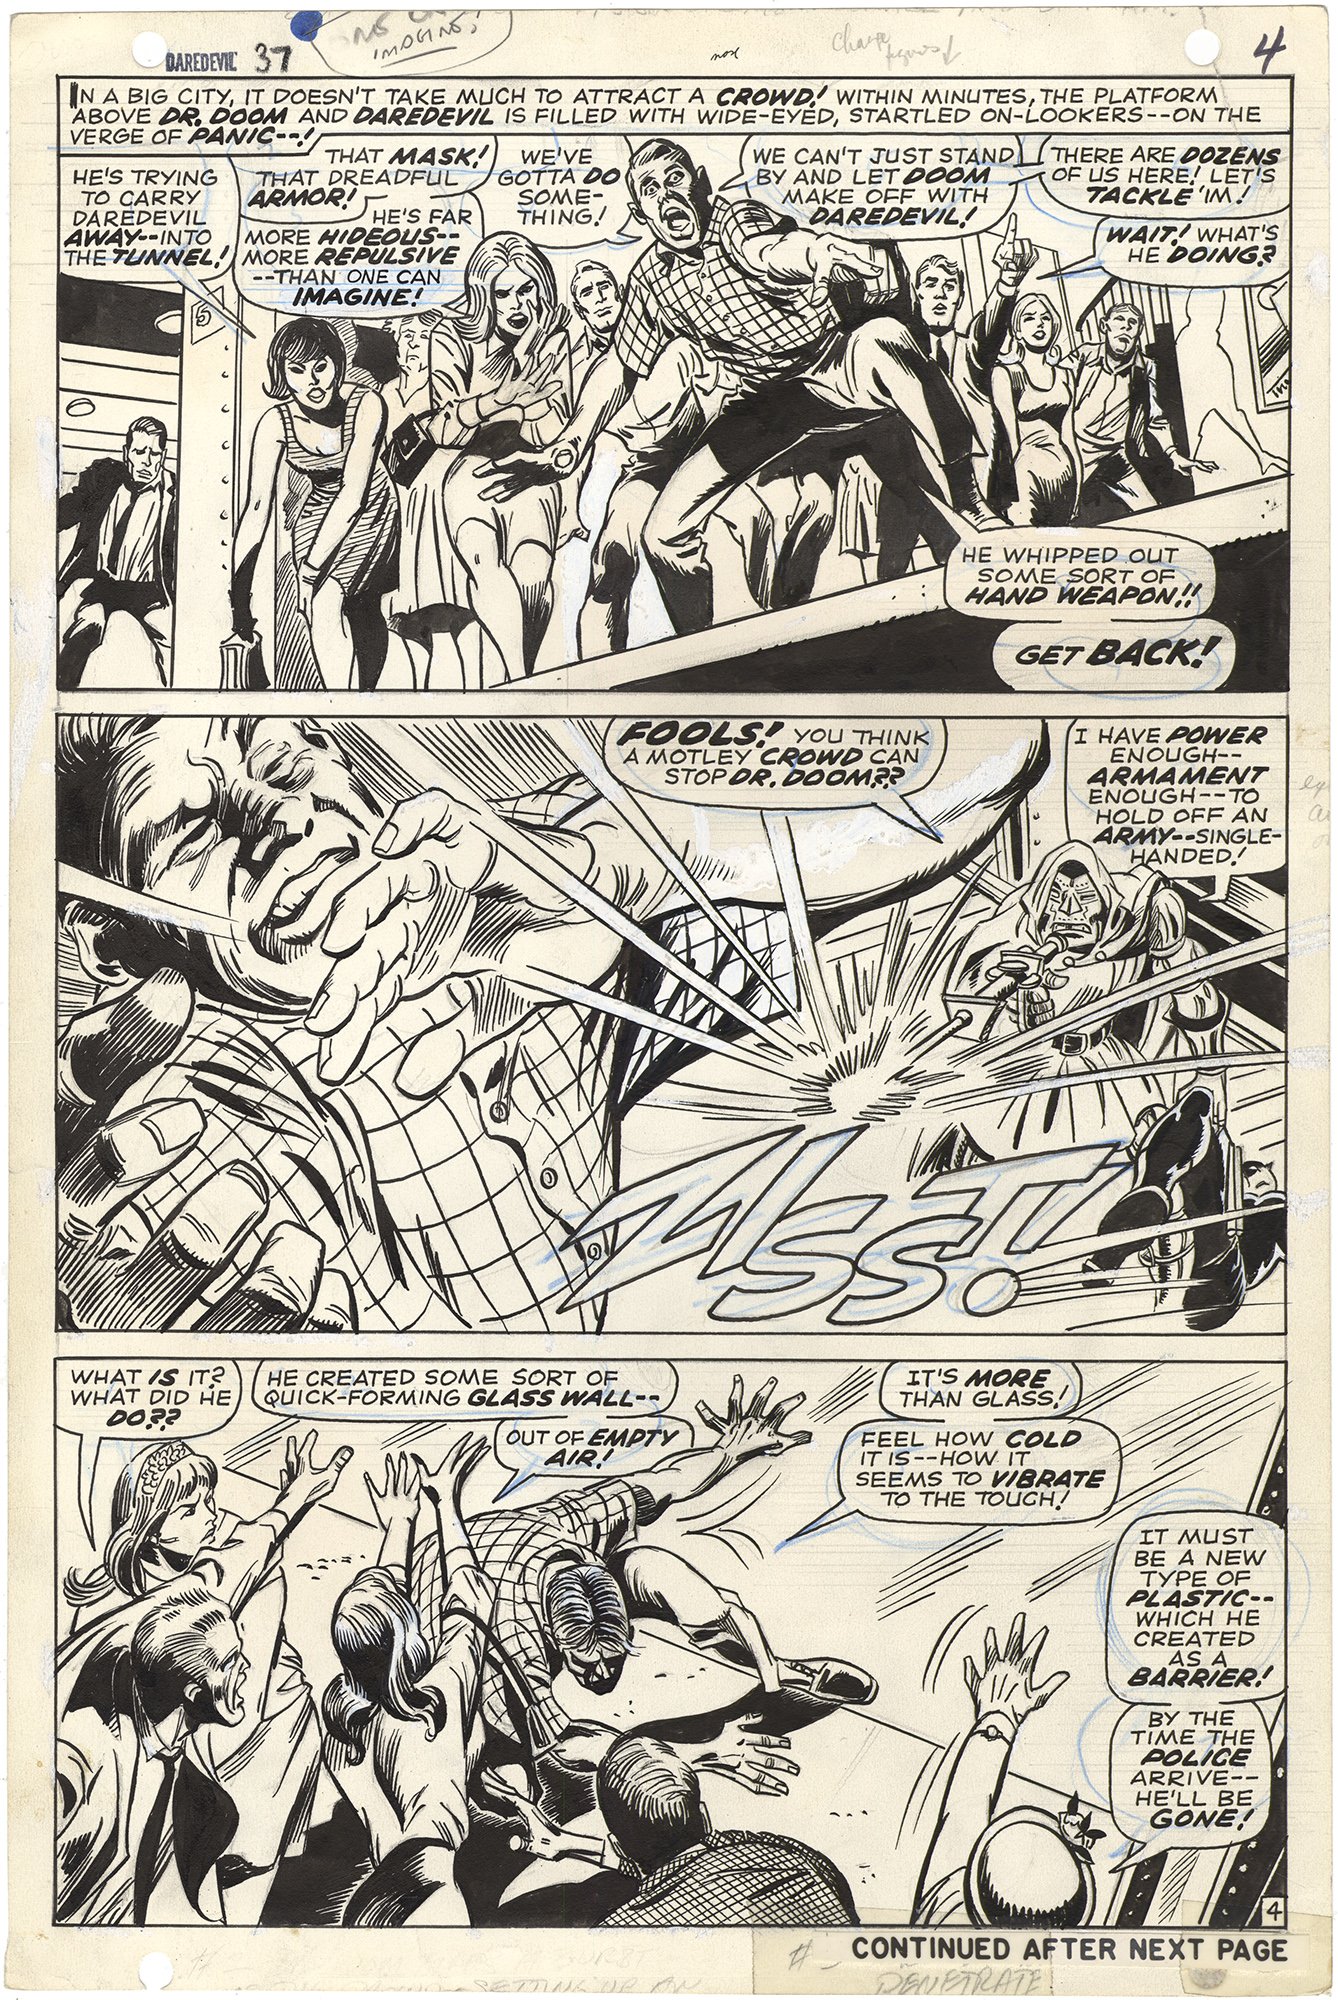 Daredevil issue 37, page 4